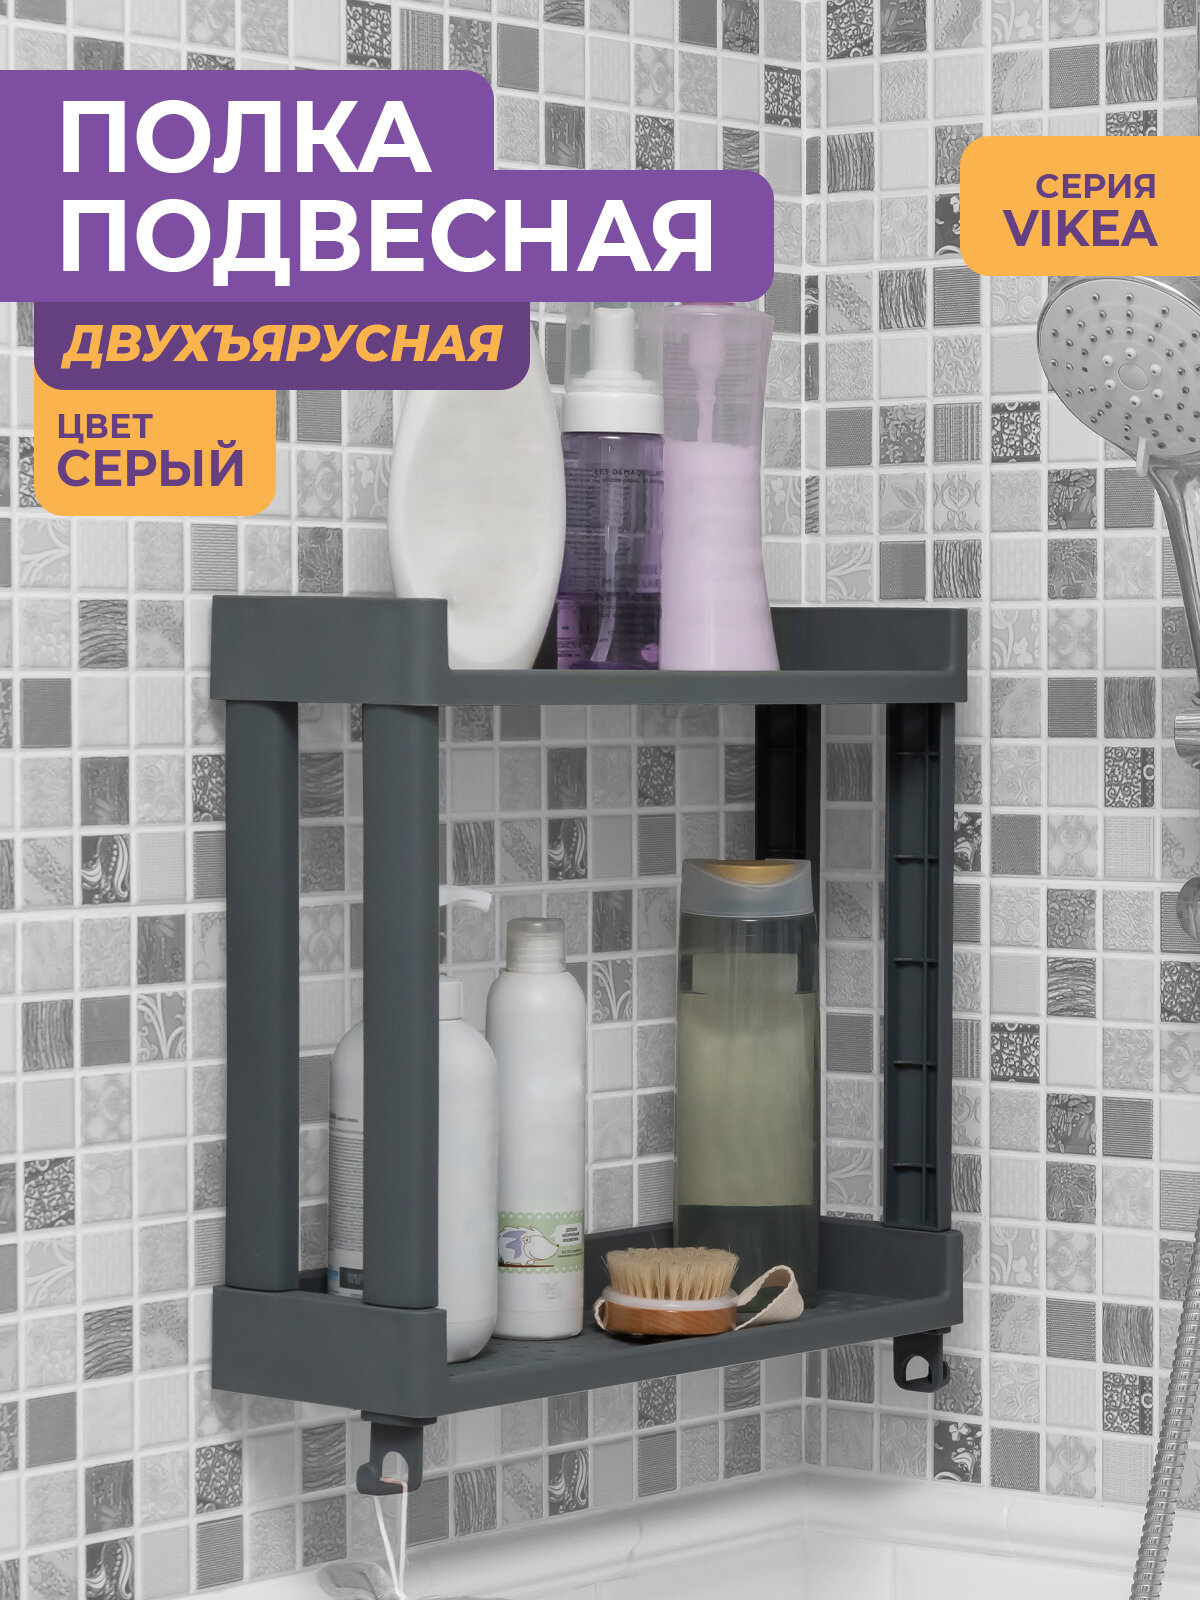 Полка для ванной настенная 2 яруса VIKEA с крючками, цвет серый / полочка навесная на кухню